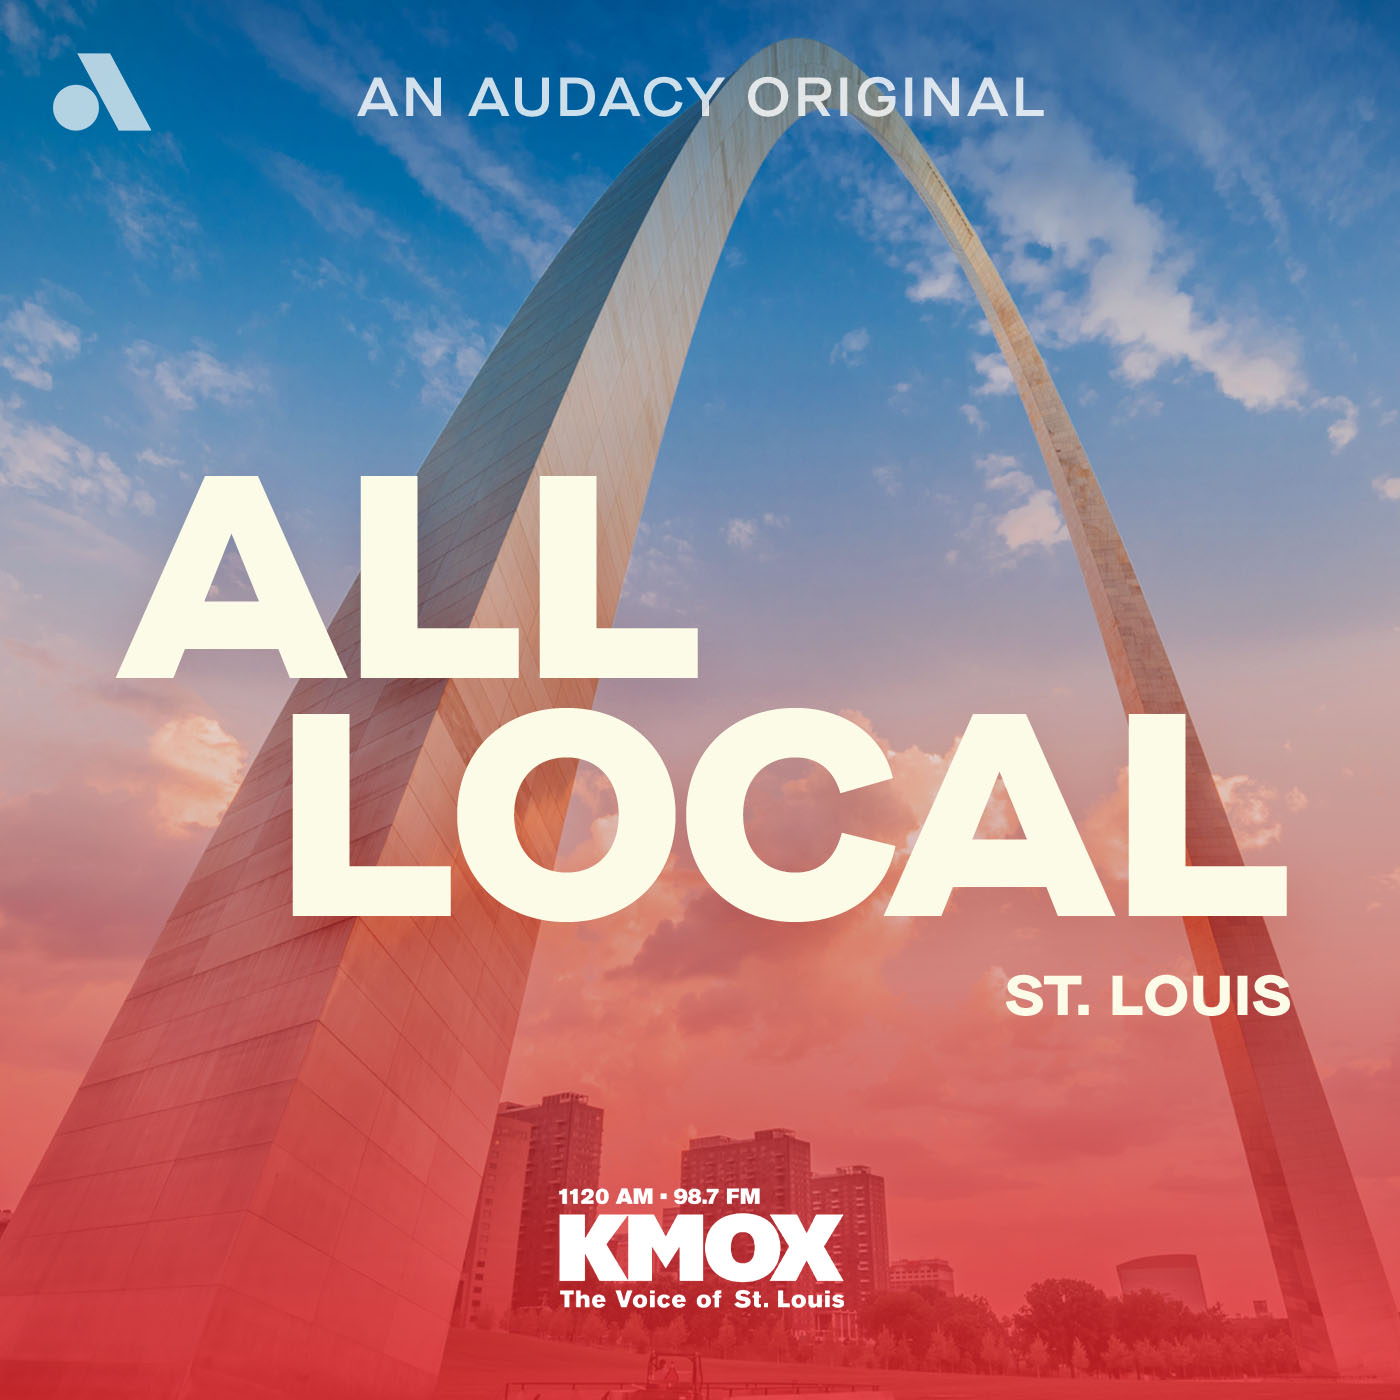 St. Louis All Local AM Podcast: Bridgeton 'slide show' injures 6, including cop